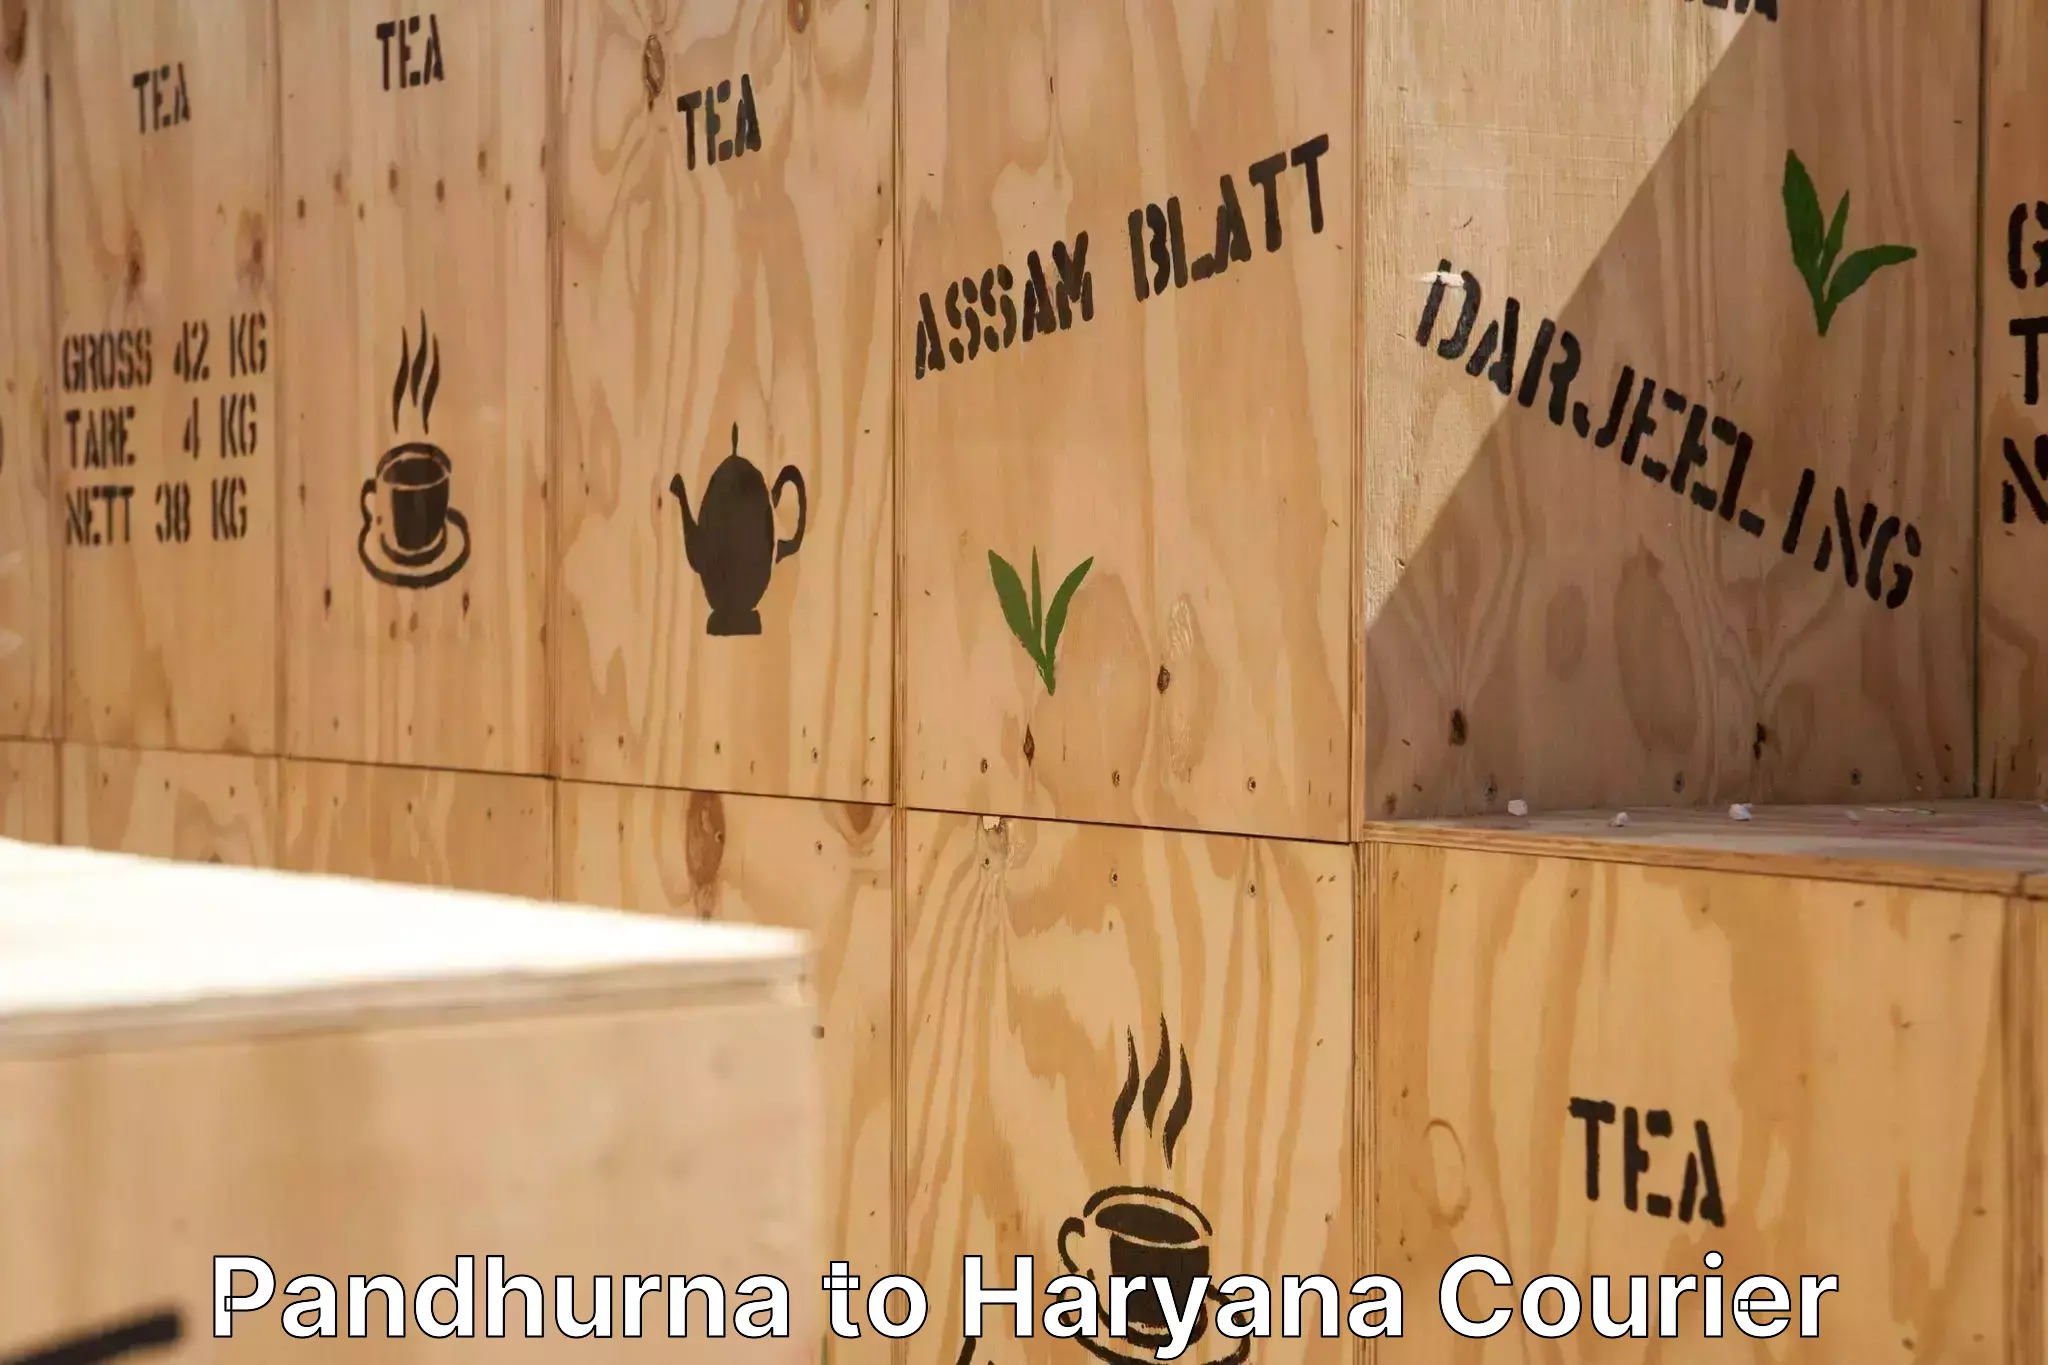 Budget-friendly movers Pandhurna to Haryana